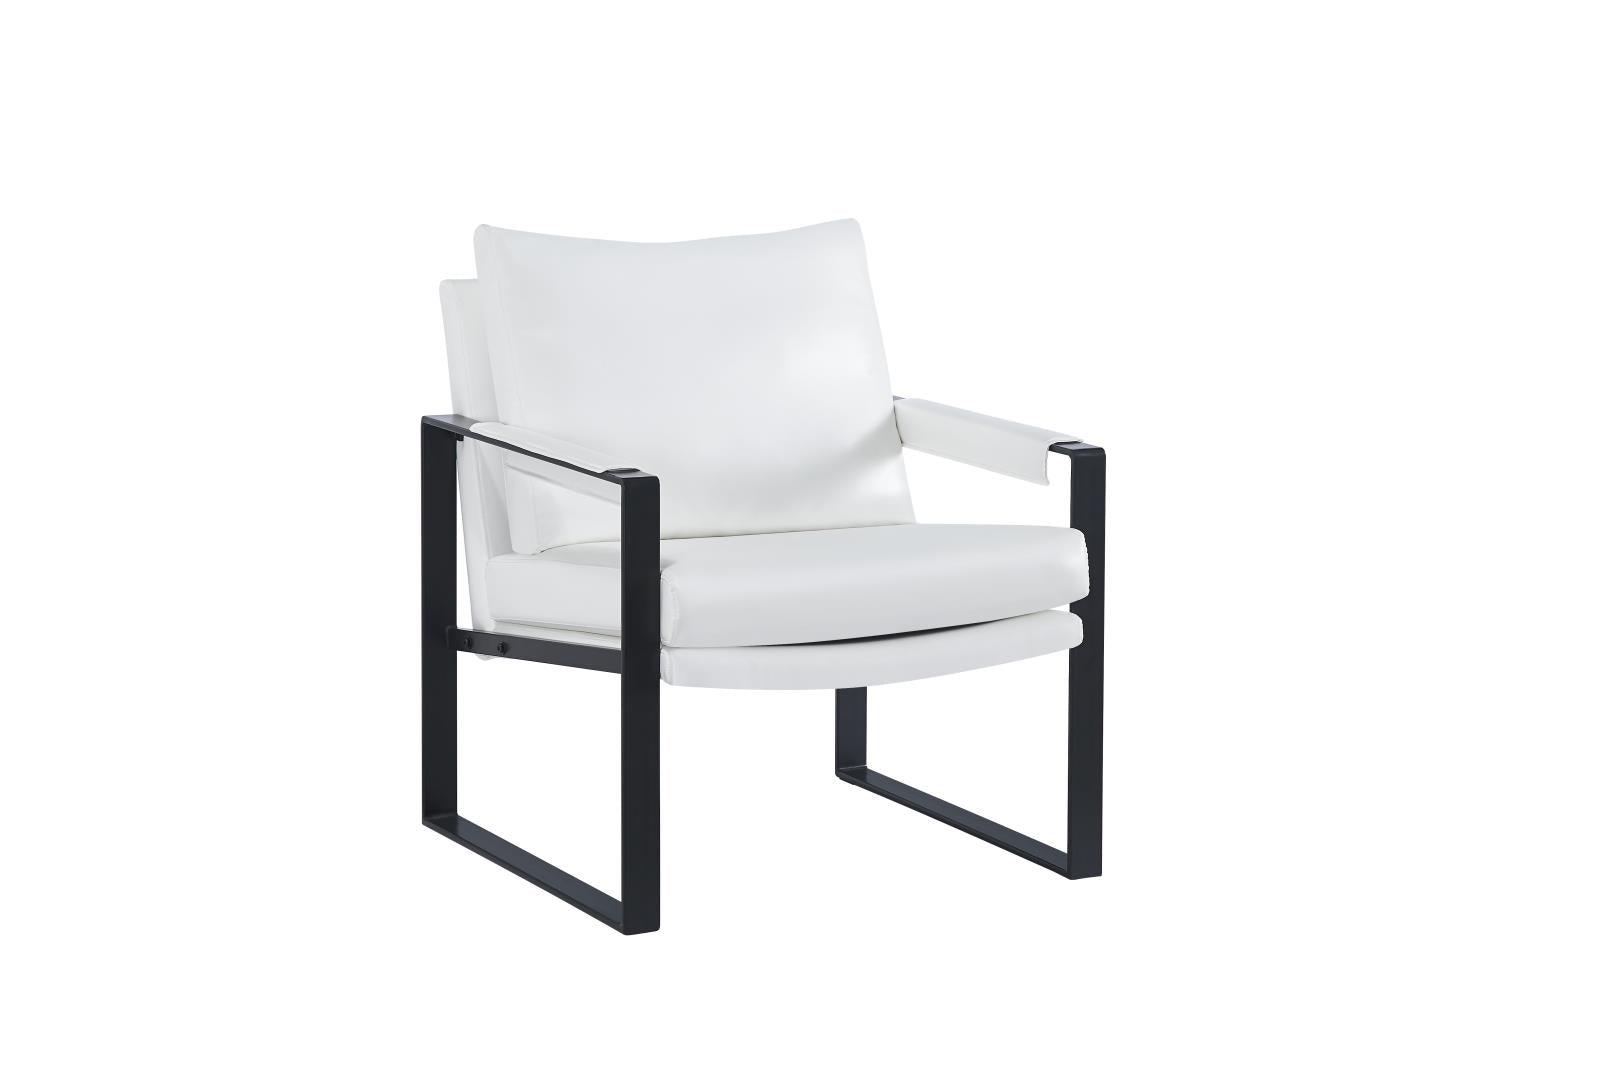 Accent Chair 903022 - Ella Furniture